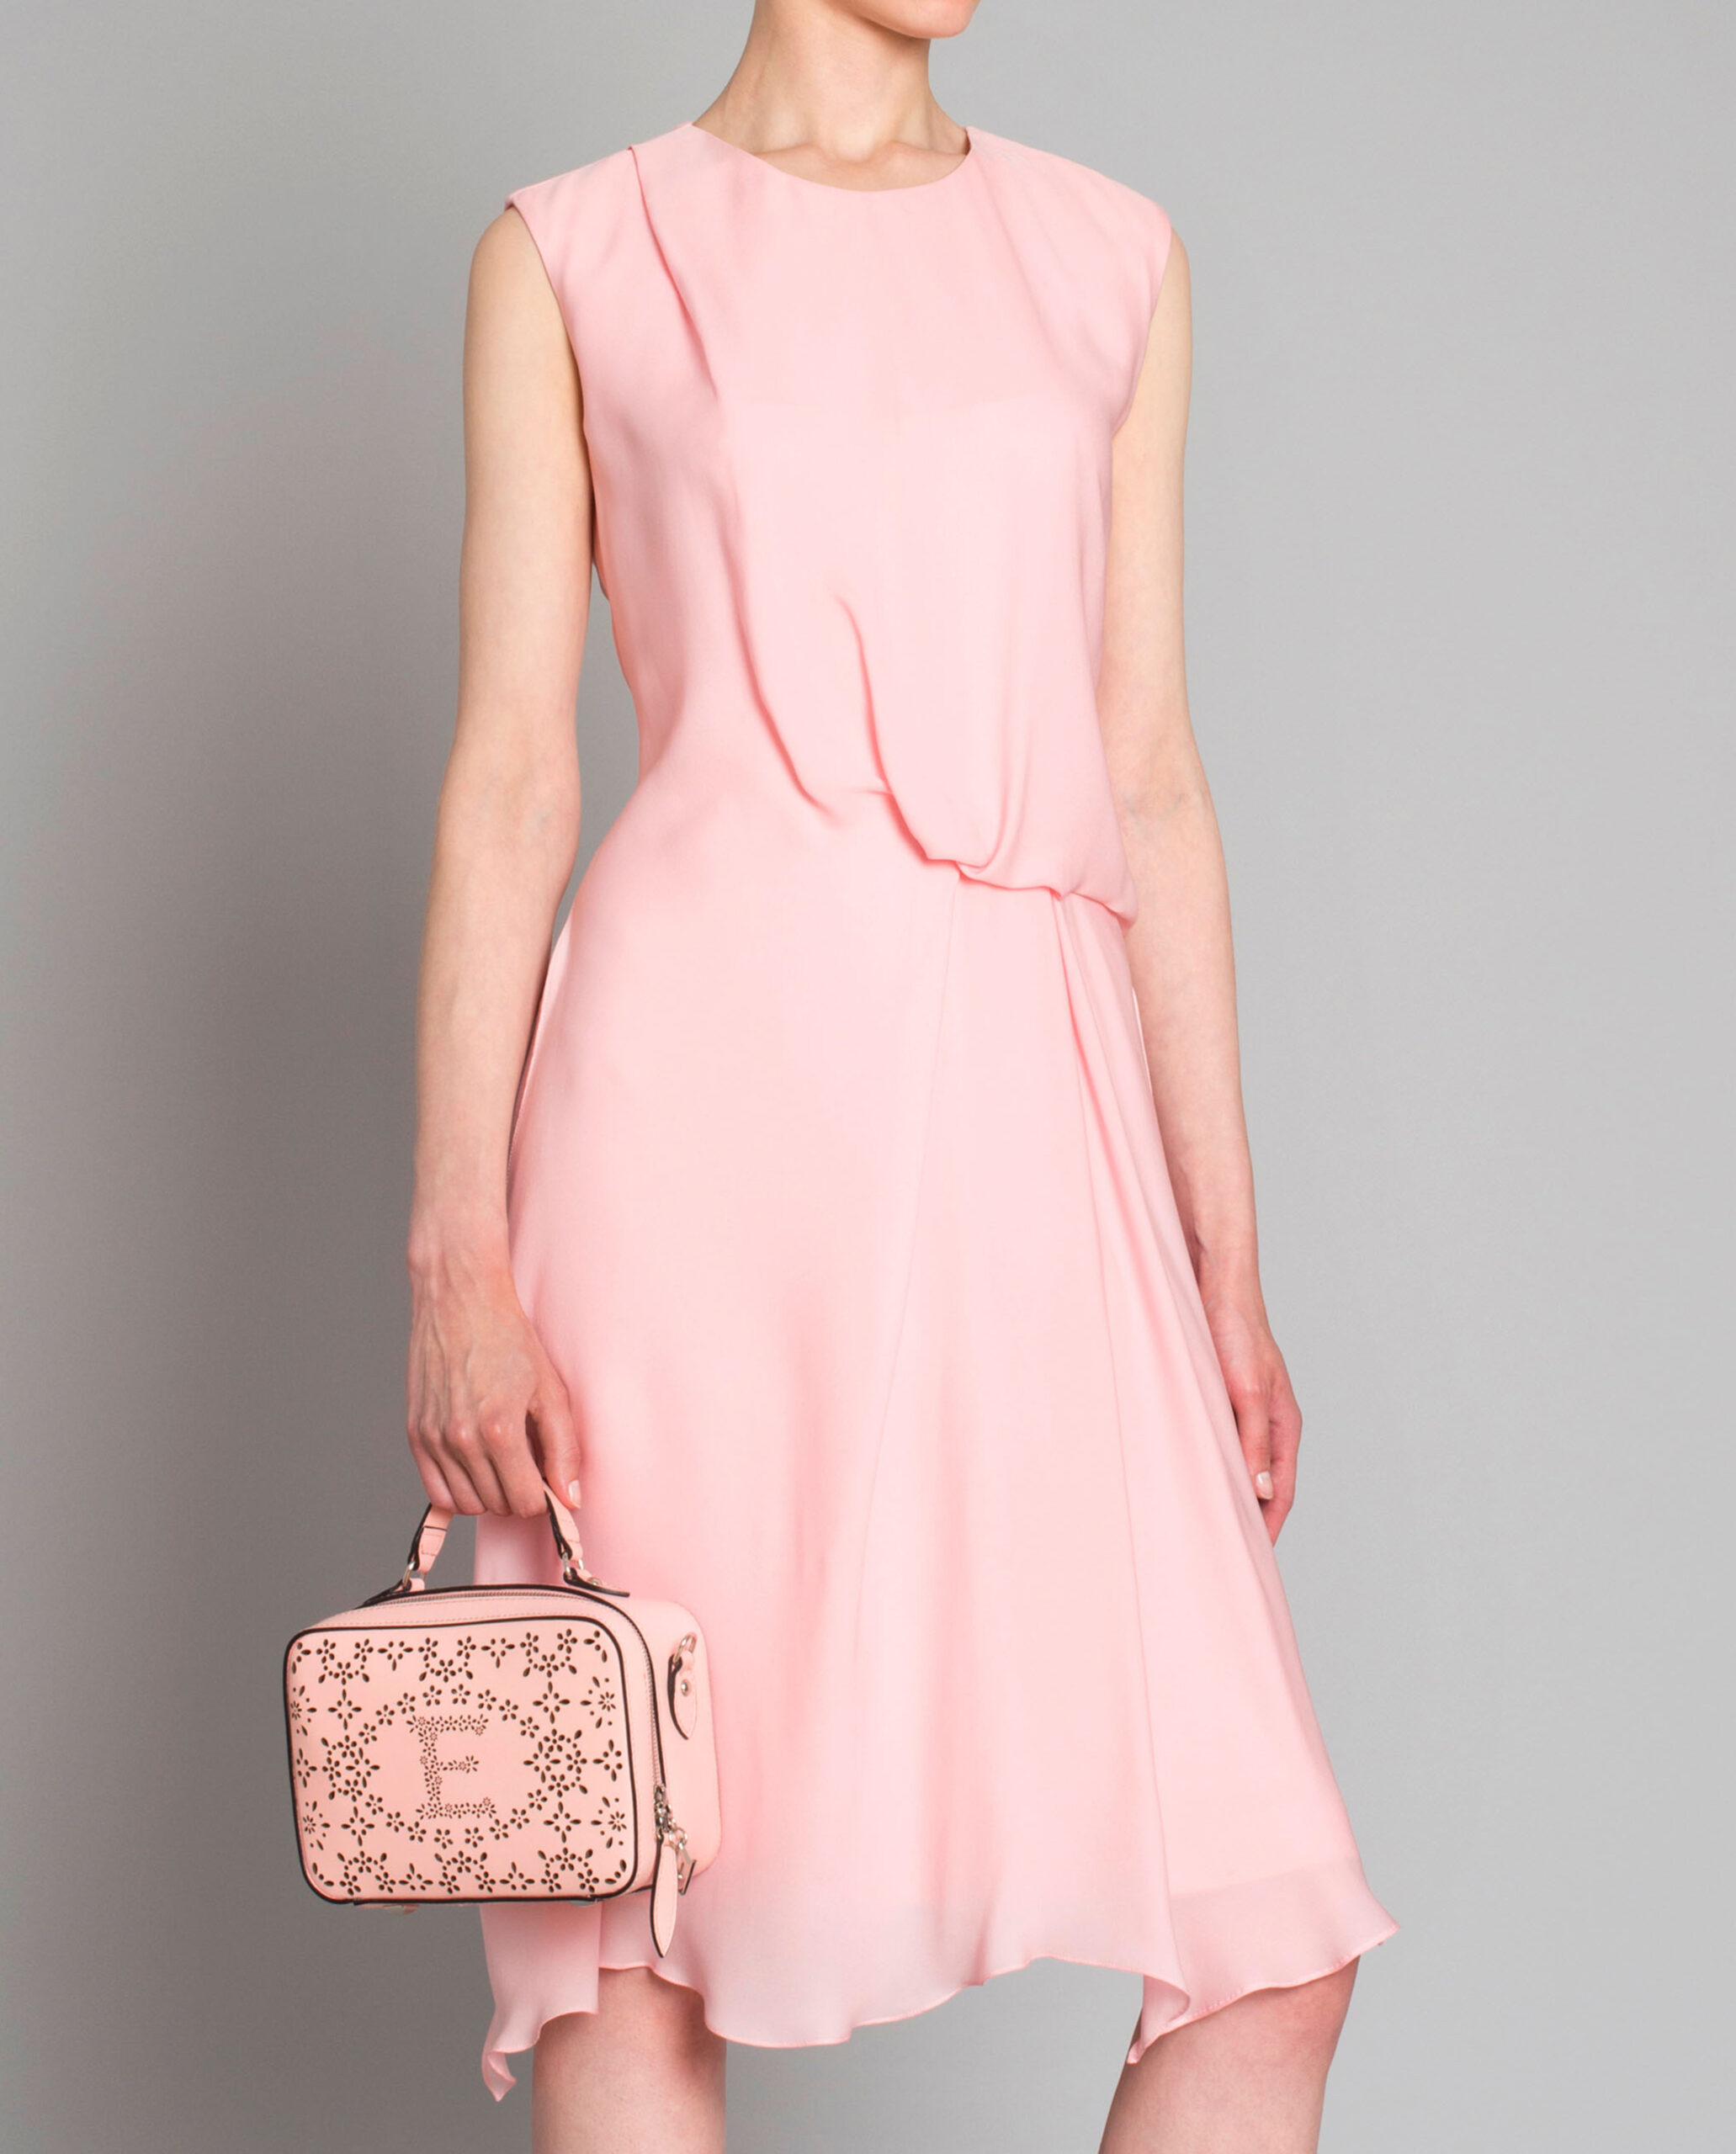 DICE KAYEK - Różowa sukienka 2551